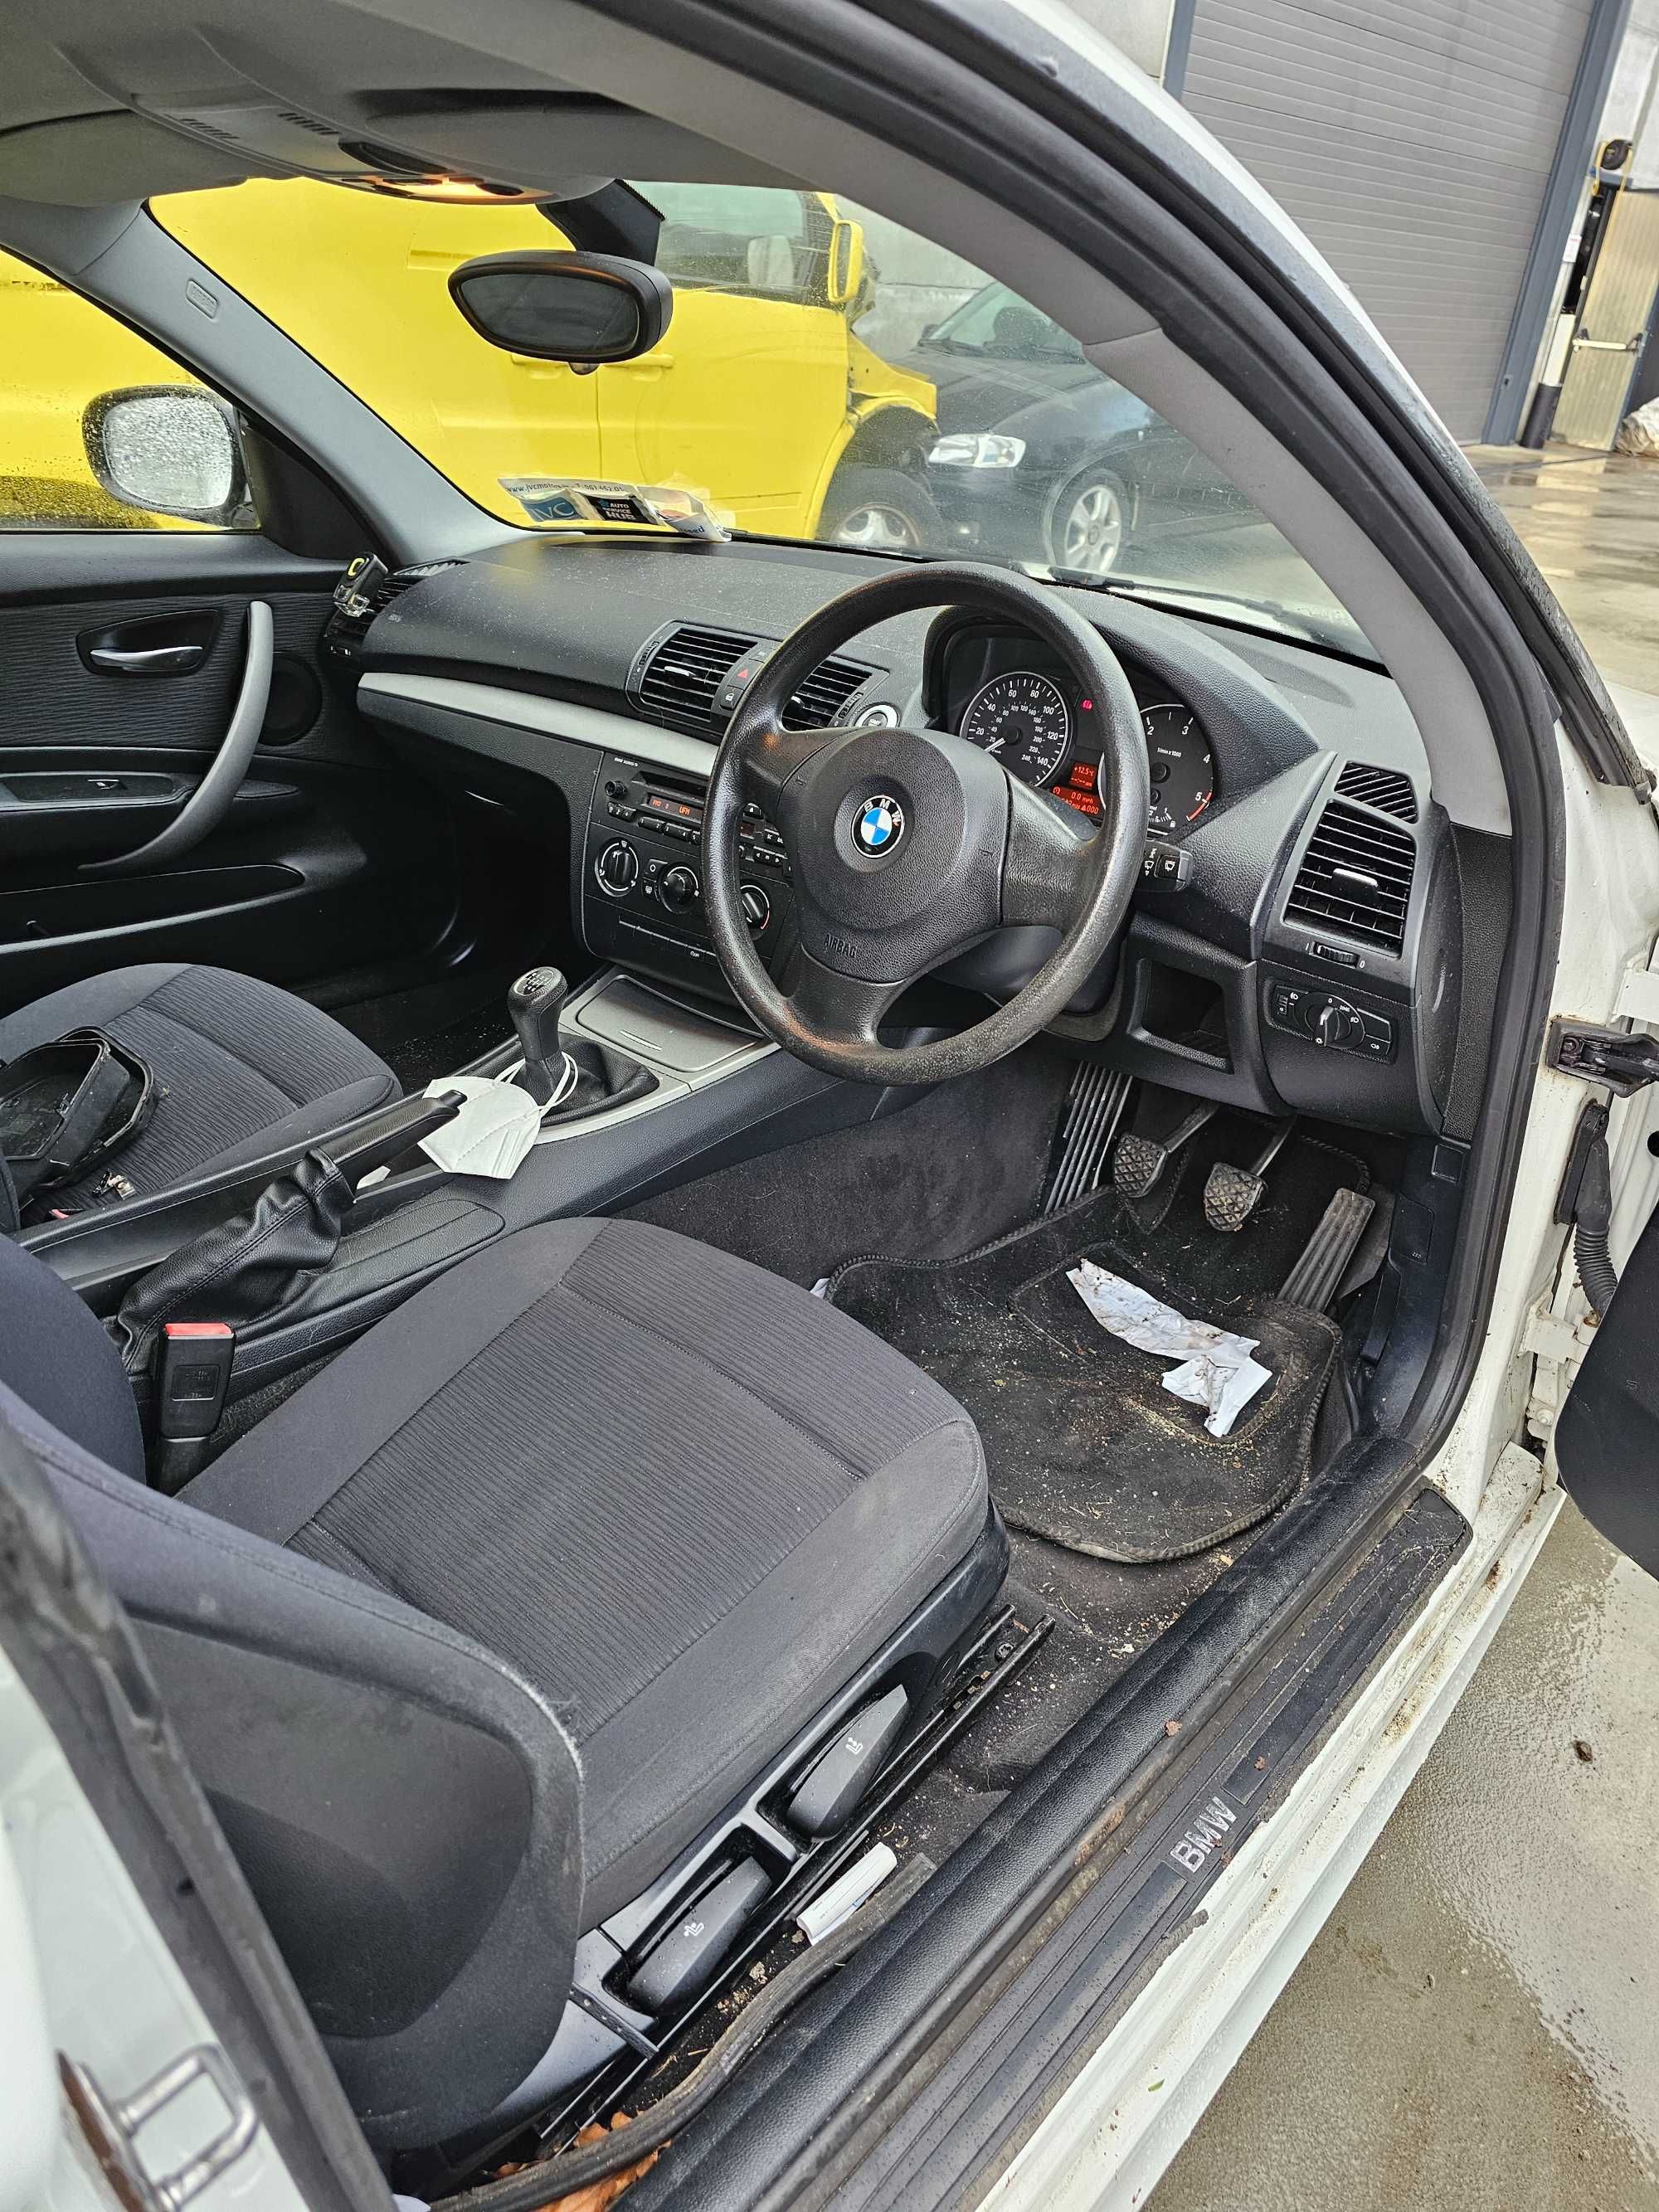 BMW 118d (2010) para Peças